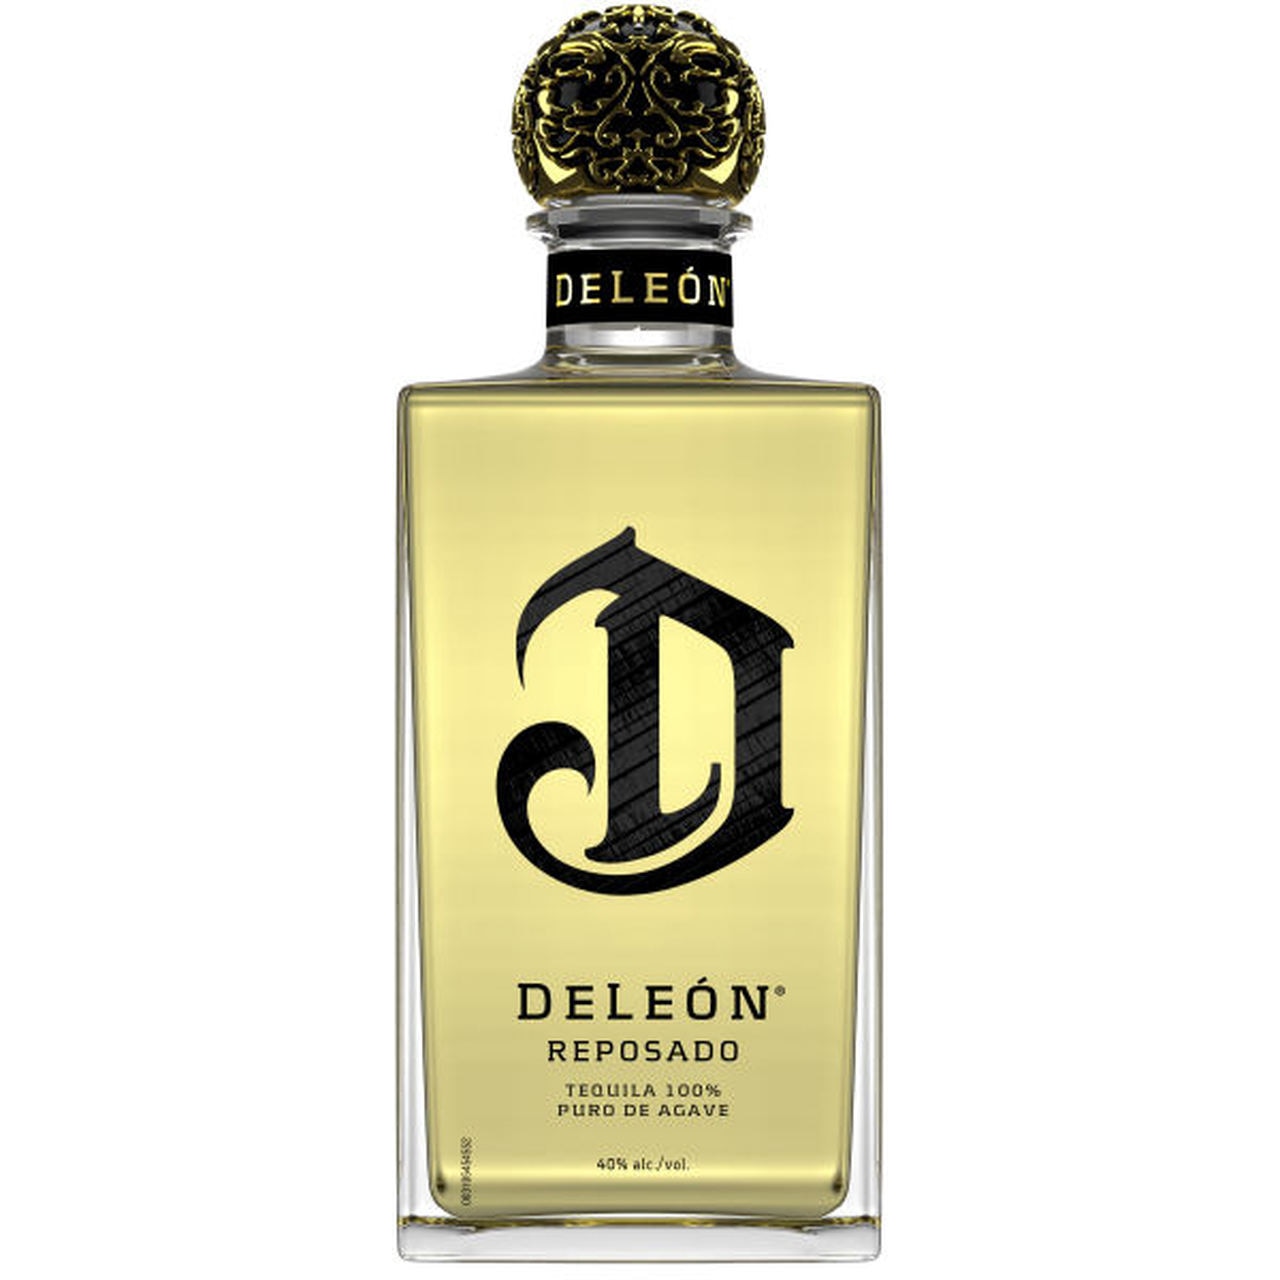 Deleon Tequila Reposado